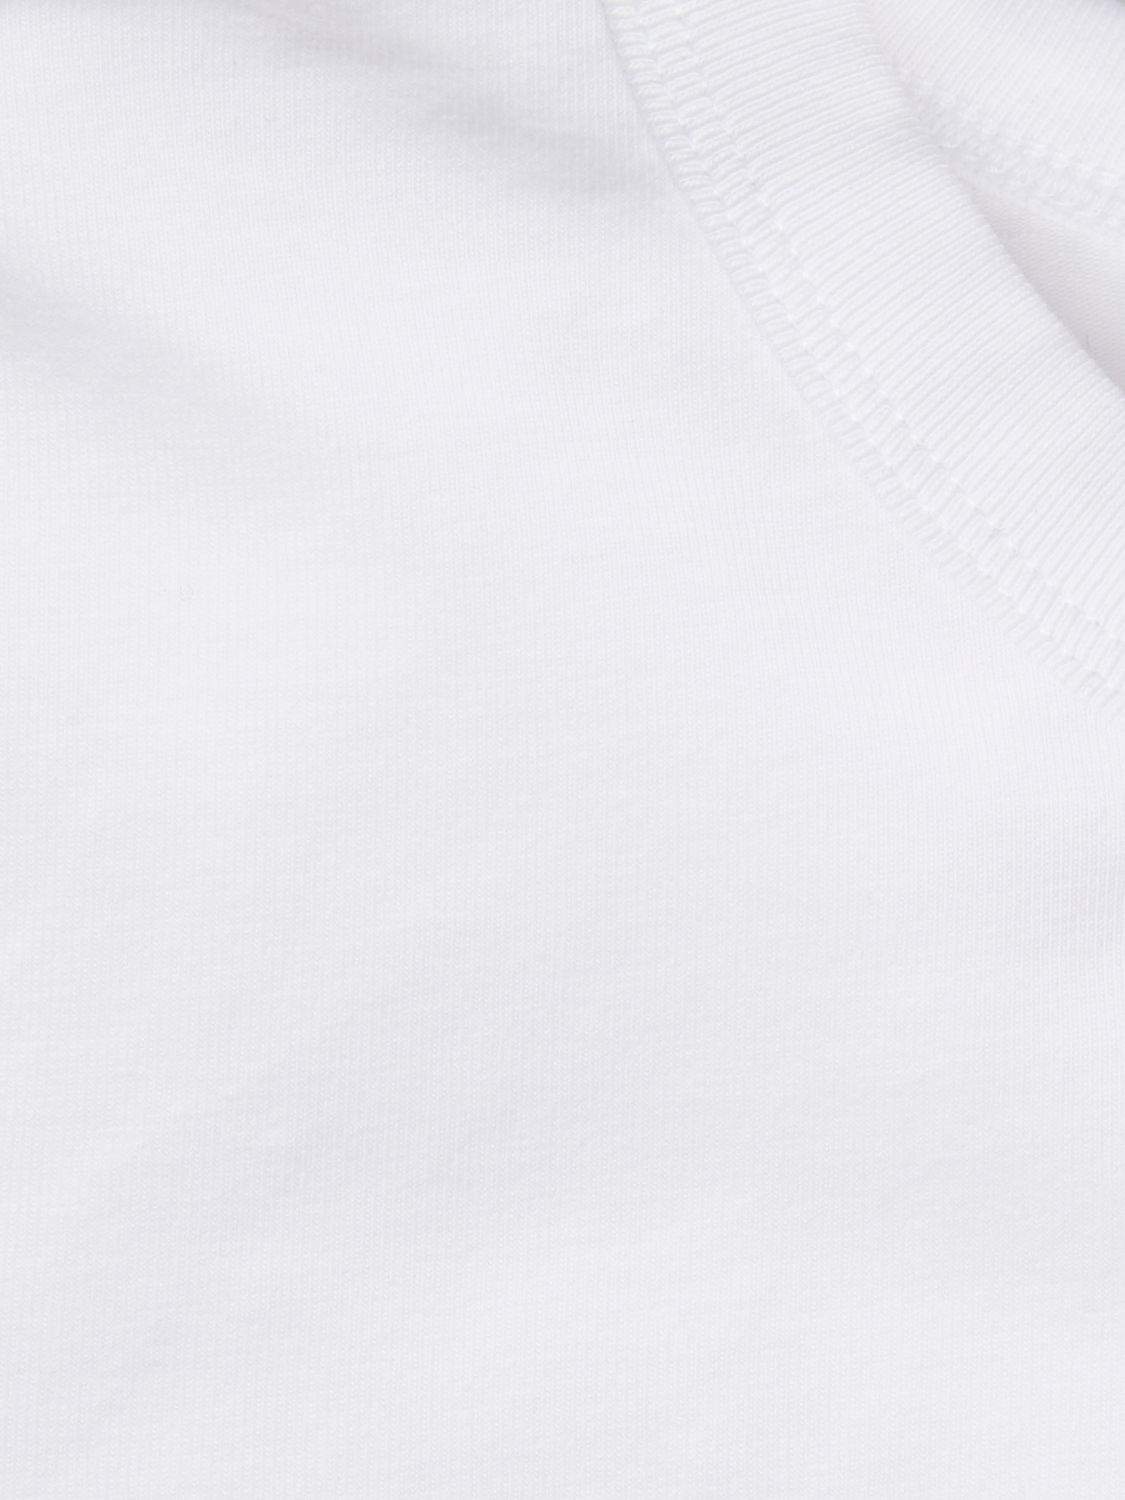 JJXX JXGIGI Marškinėliai -Bright White - 12248921